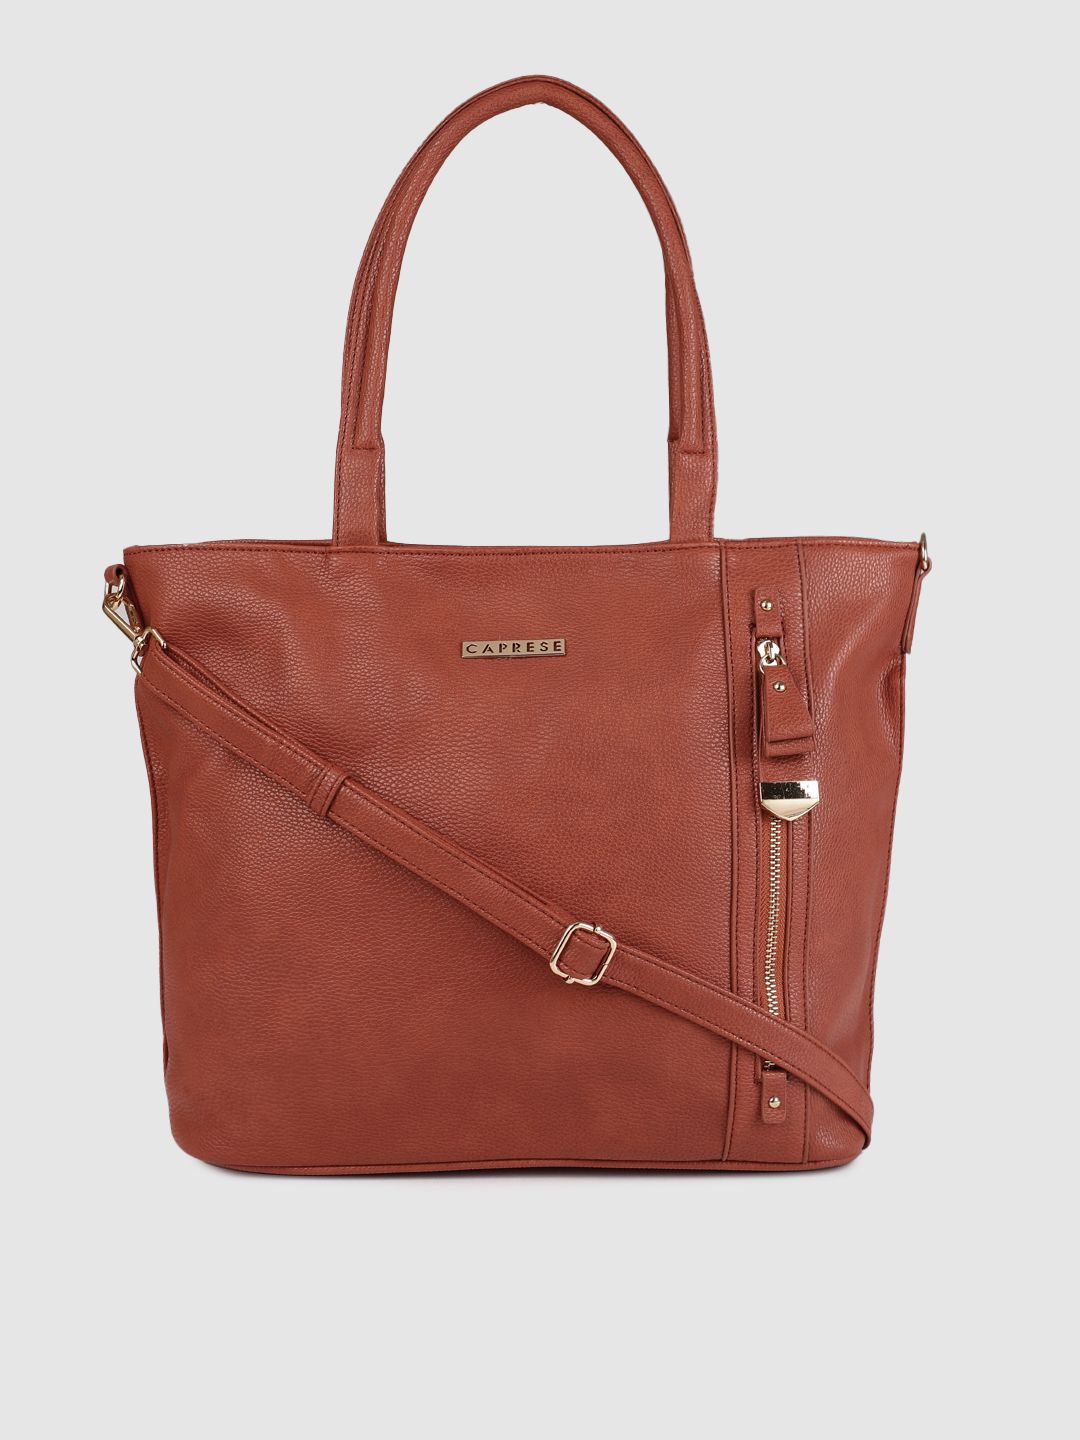 Caprese Tan Textured GLADYS Shoulder Bag Price in India